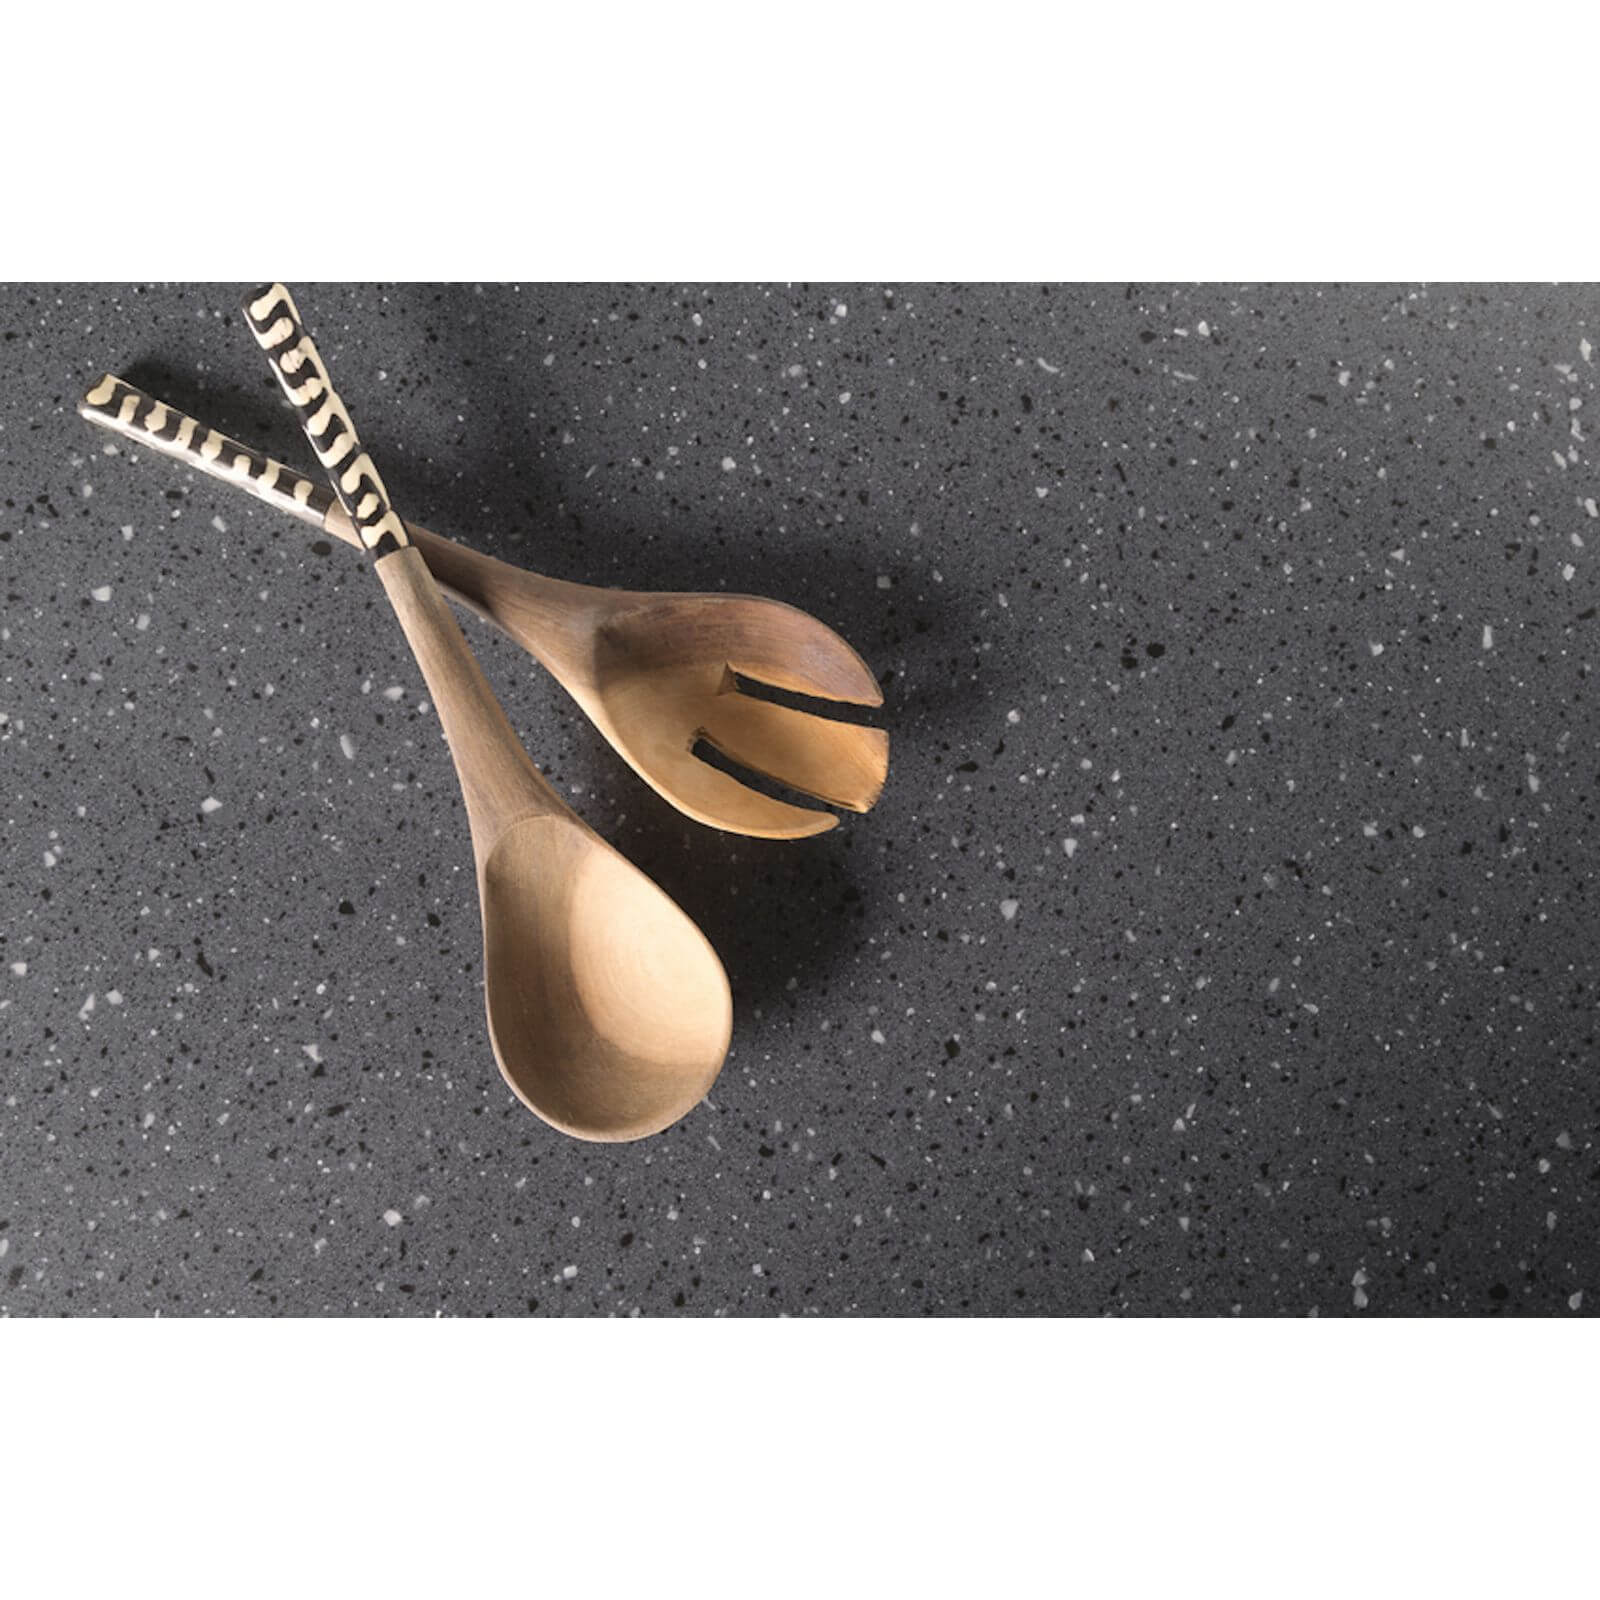 Maia Greystone Kitchen Sink Worktop - Acrylic Left Hand Bowl - 3600 x 650 x 28mm